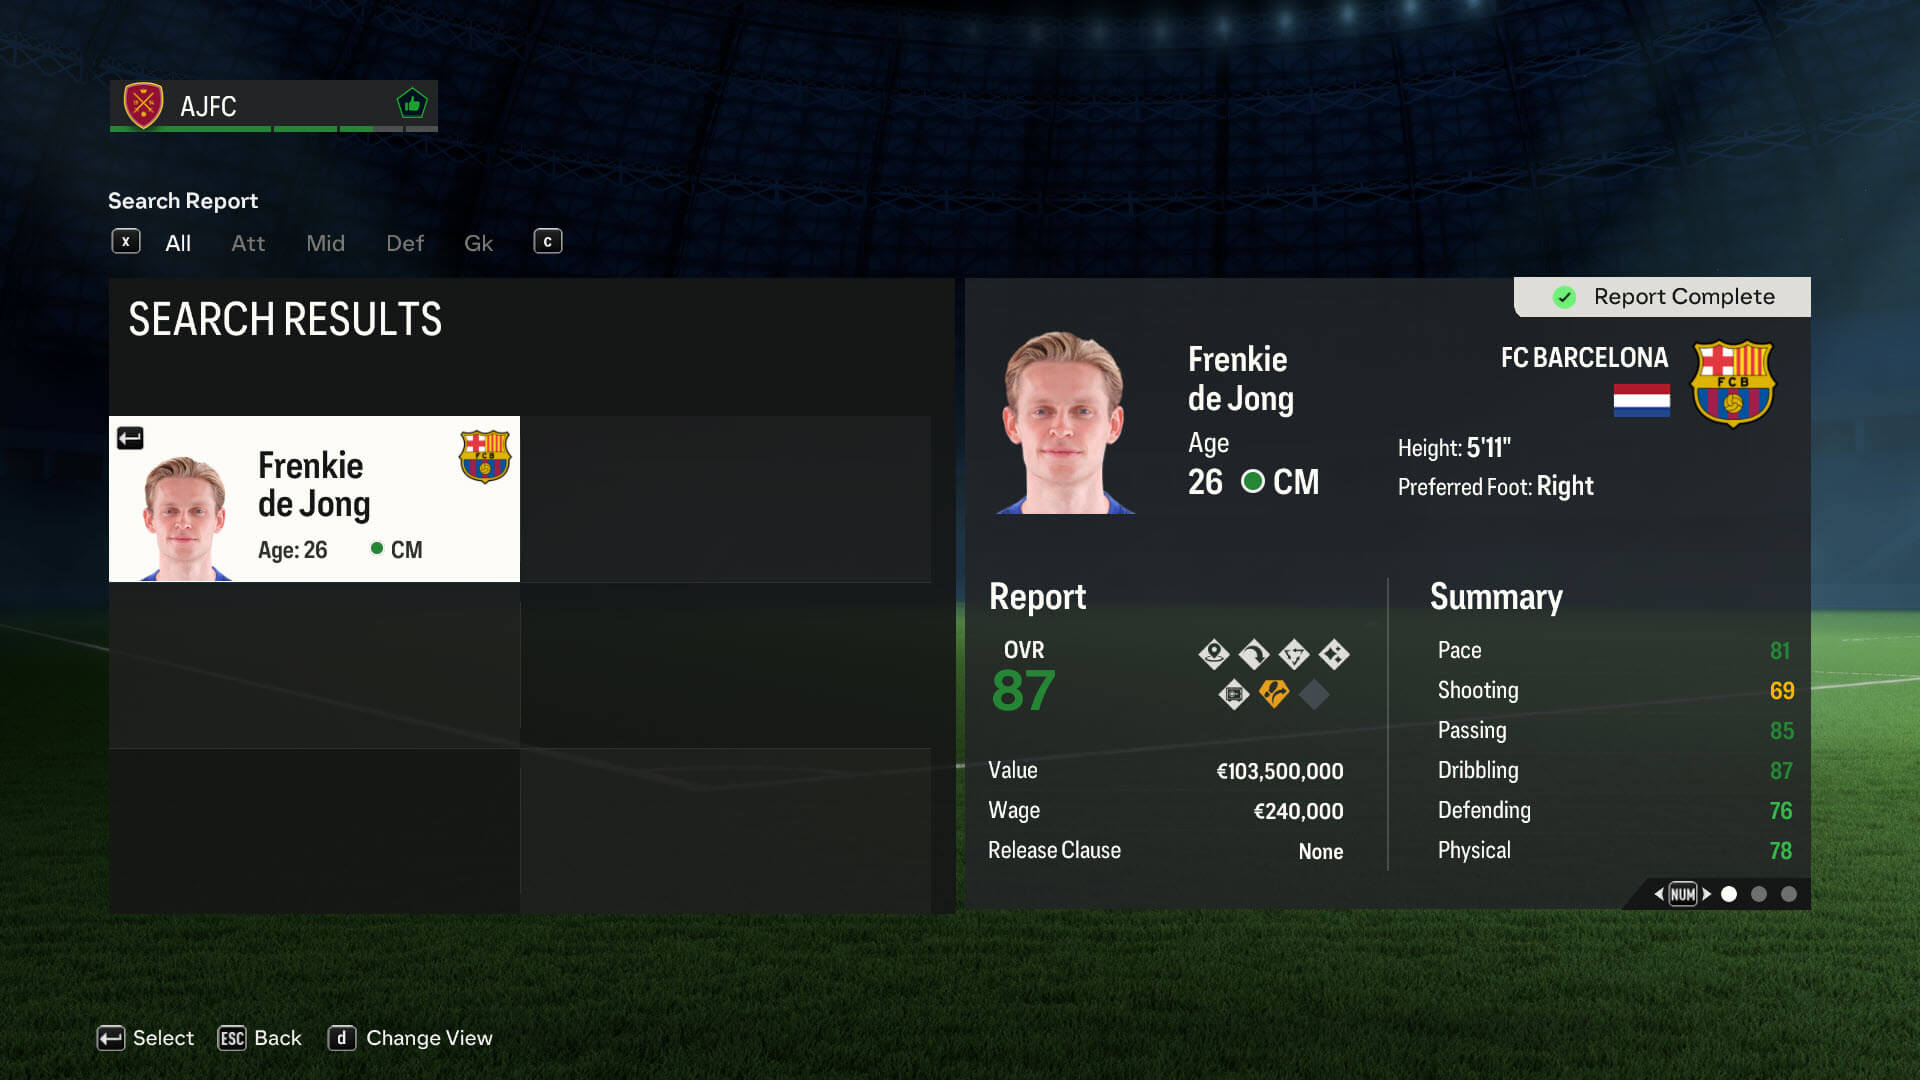 Frenkie de Jong - a good midfielder